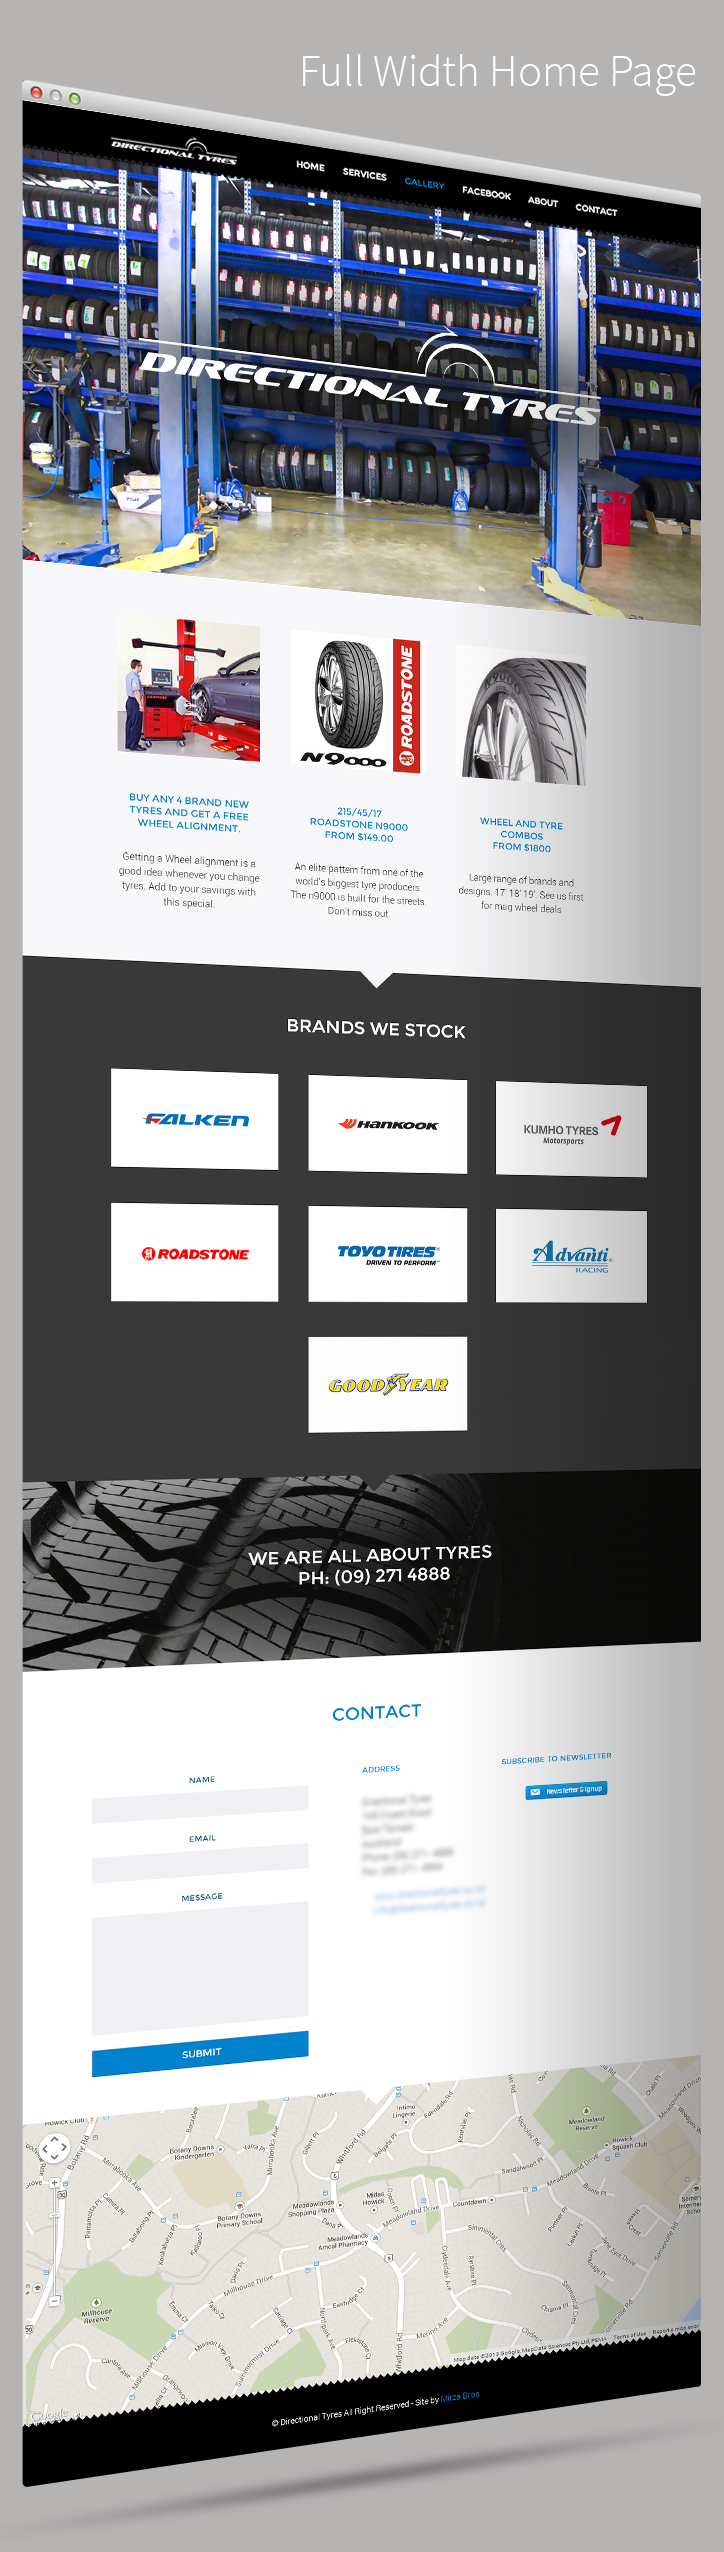 Website Directional Tyres Tyres photos